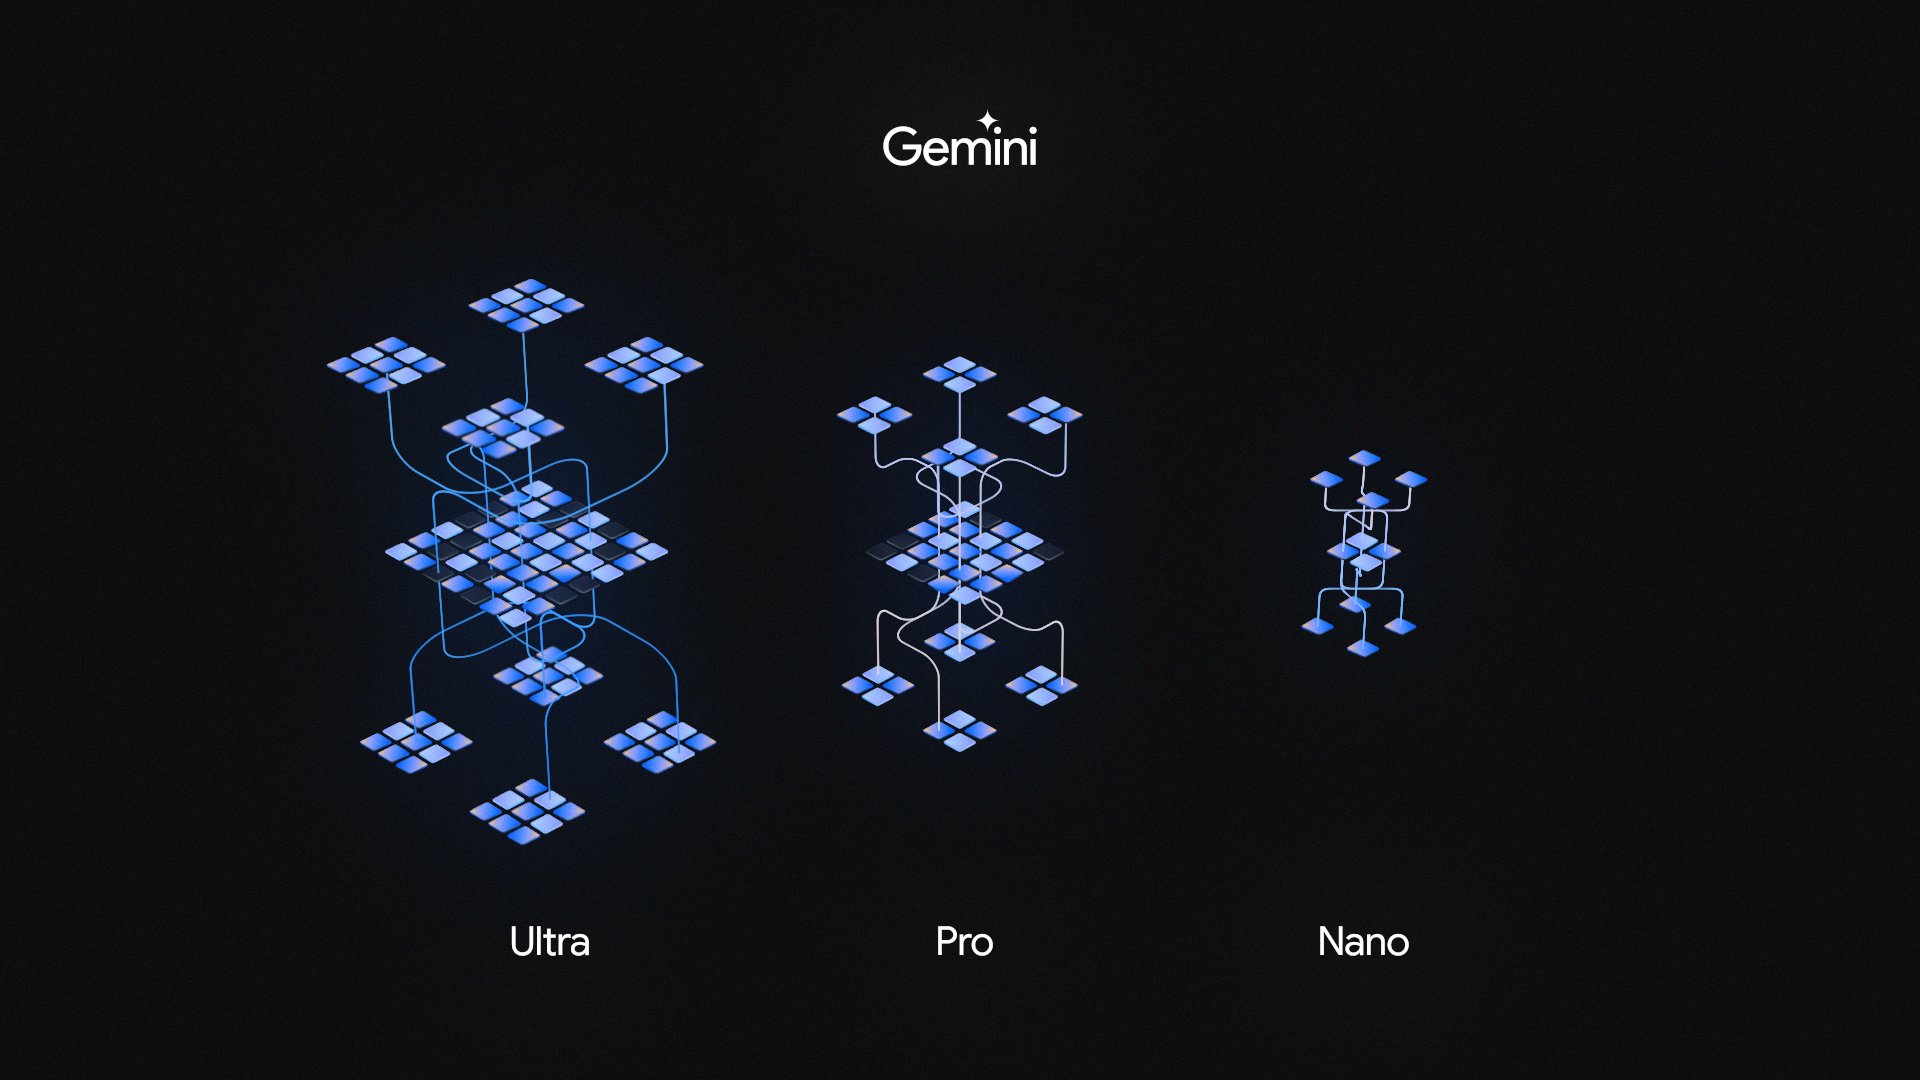 visualization of the three different gemini models